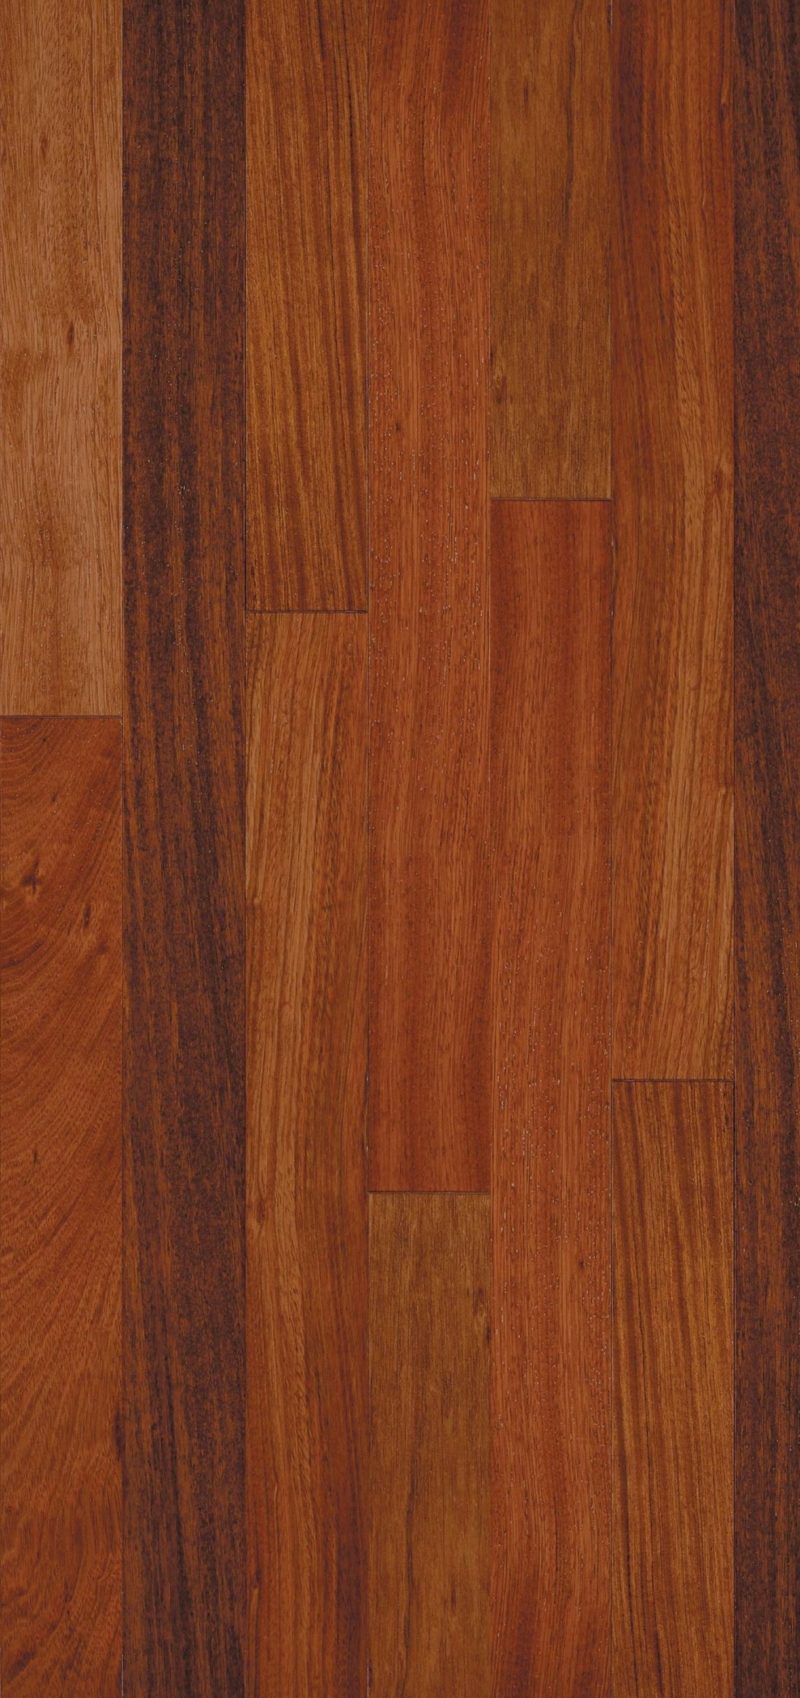 Brazilian-cherry-hardwood-flooring